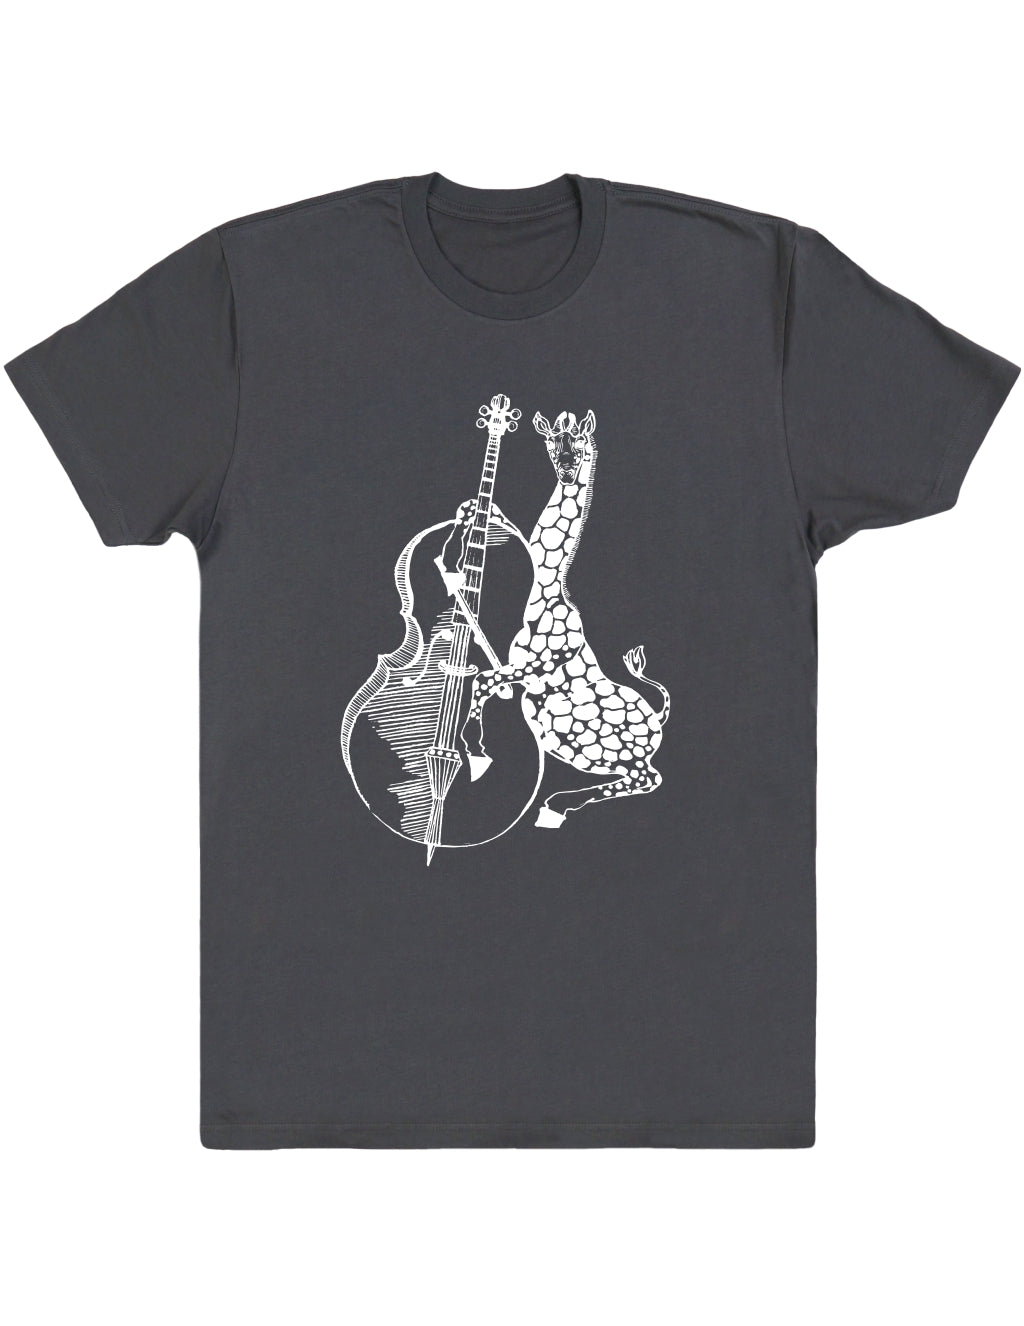 SEEMBO Giraffe Playing Cello Men's Cotton T-Shirt